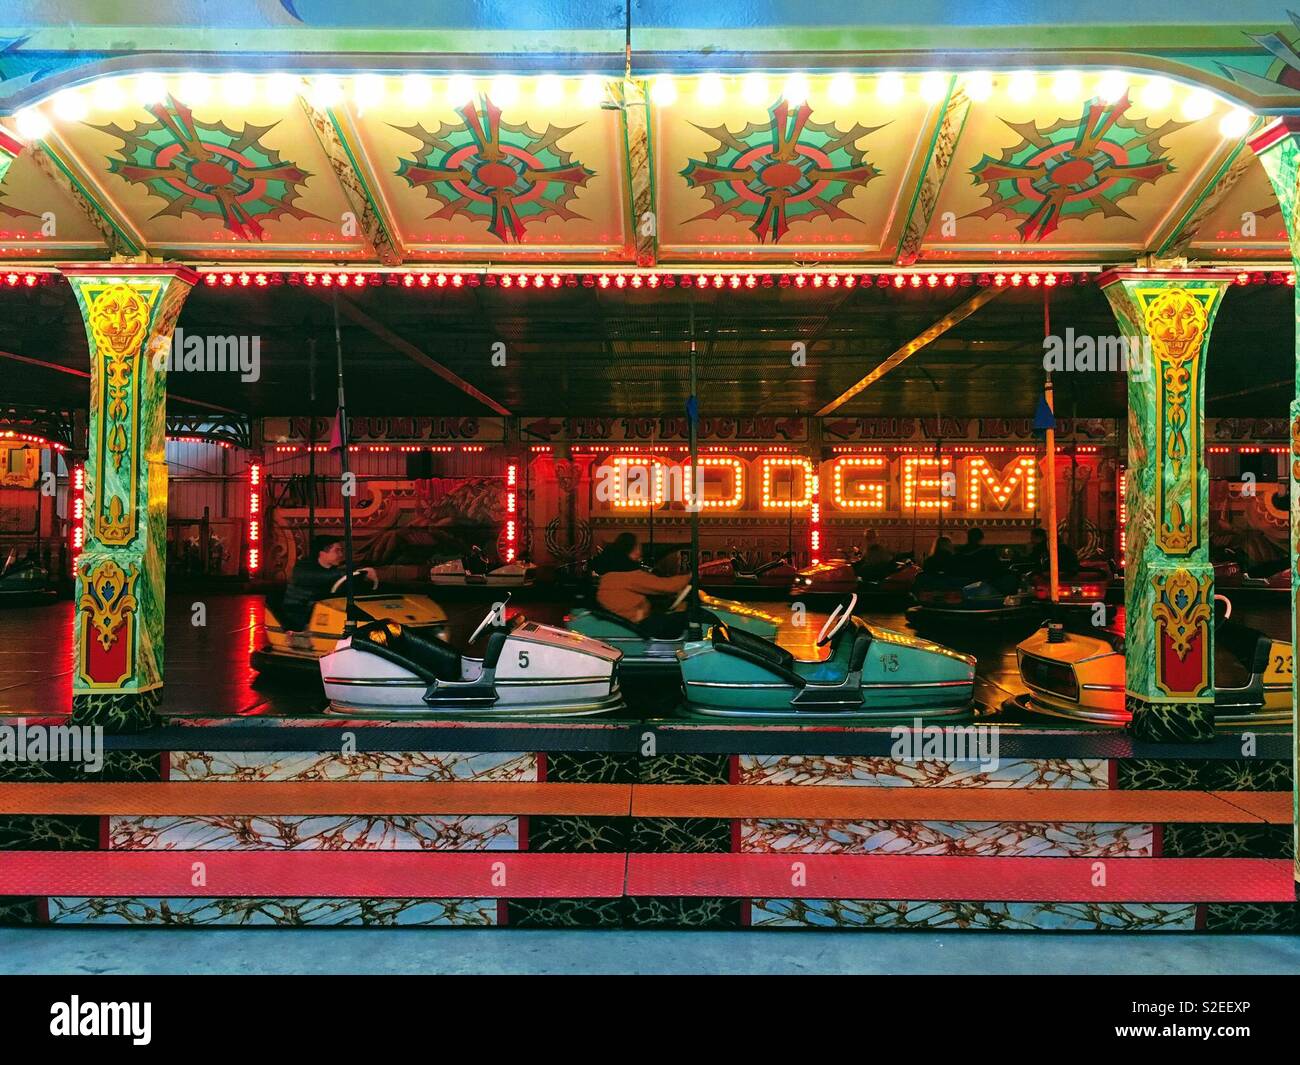 Vintage fairground dodgems at dingles fairground heritage centre. Stock Photo